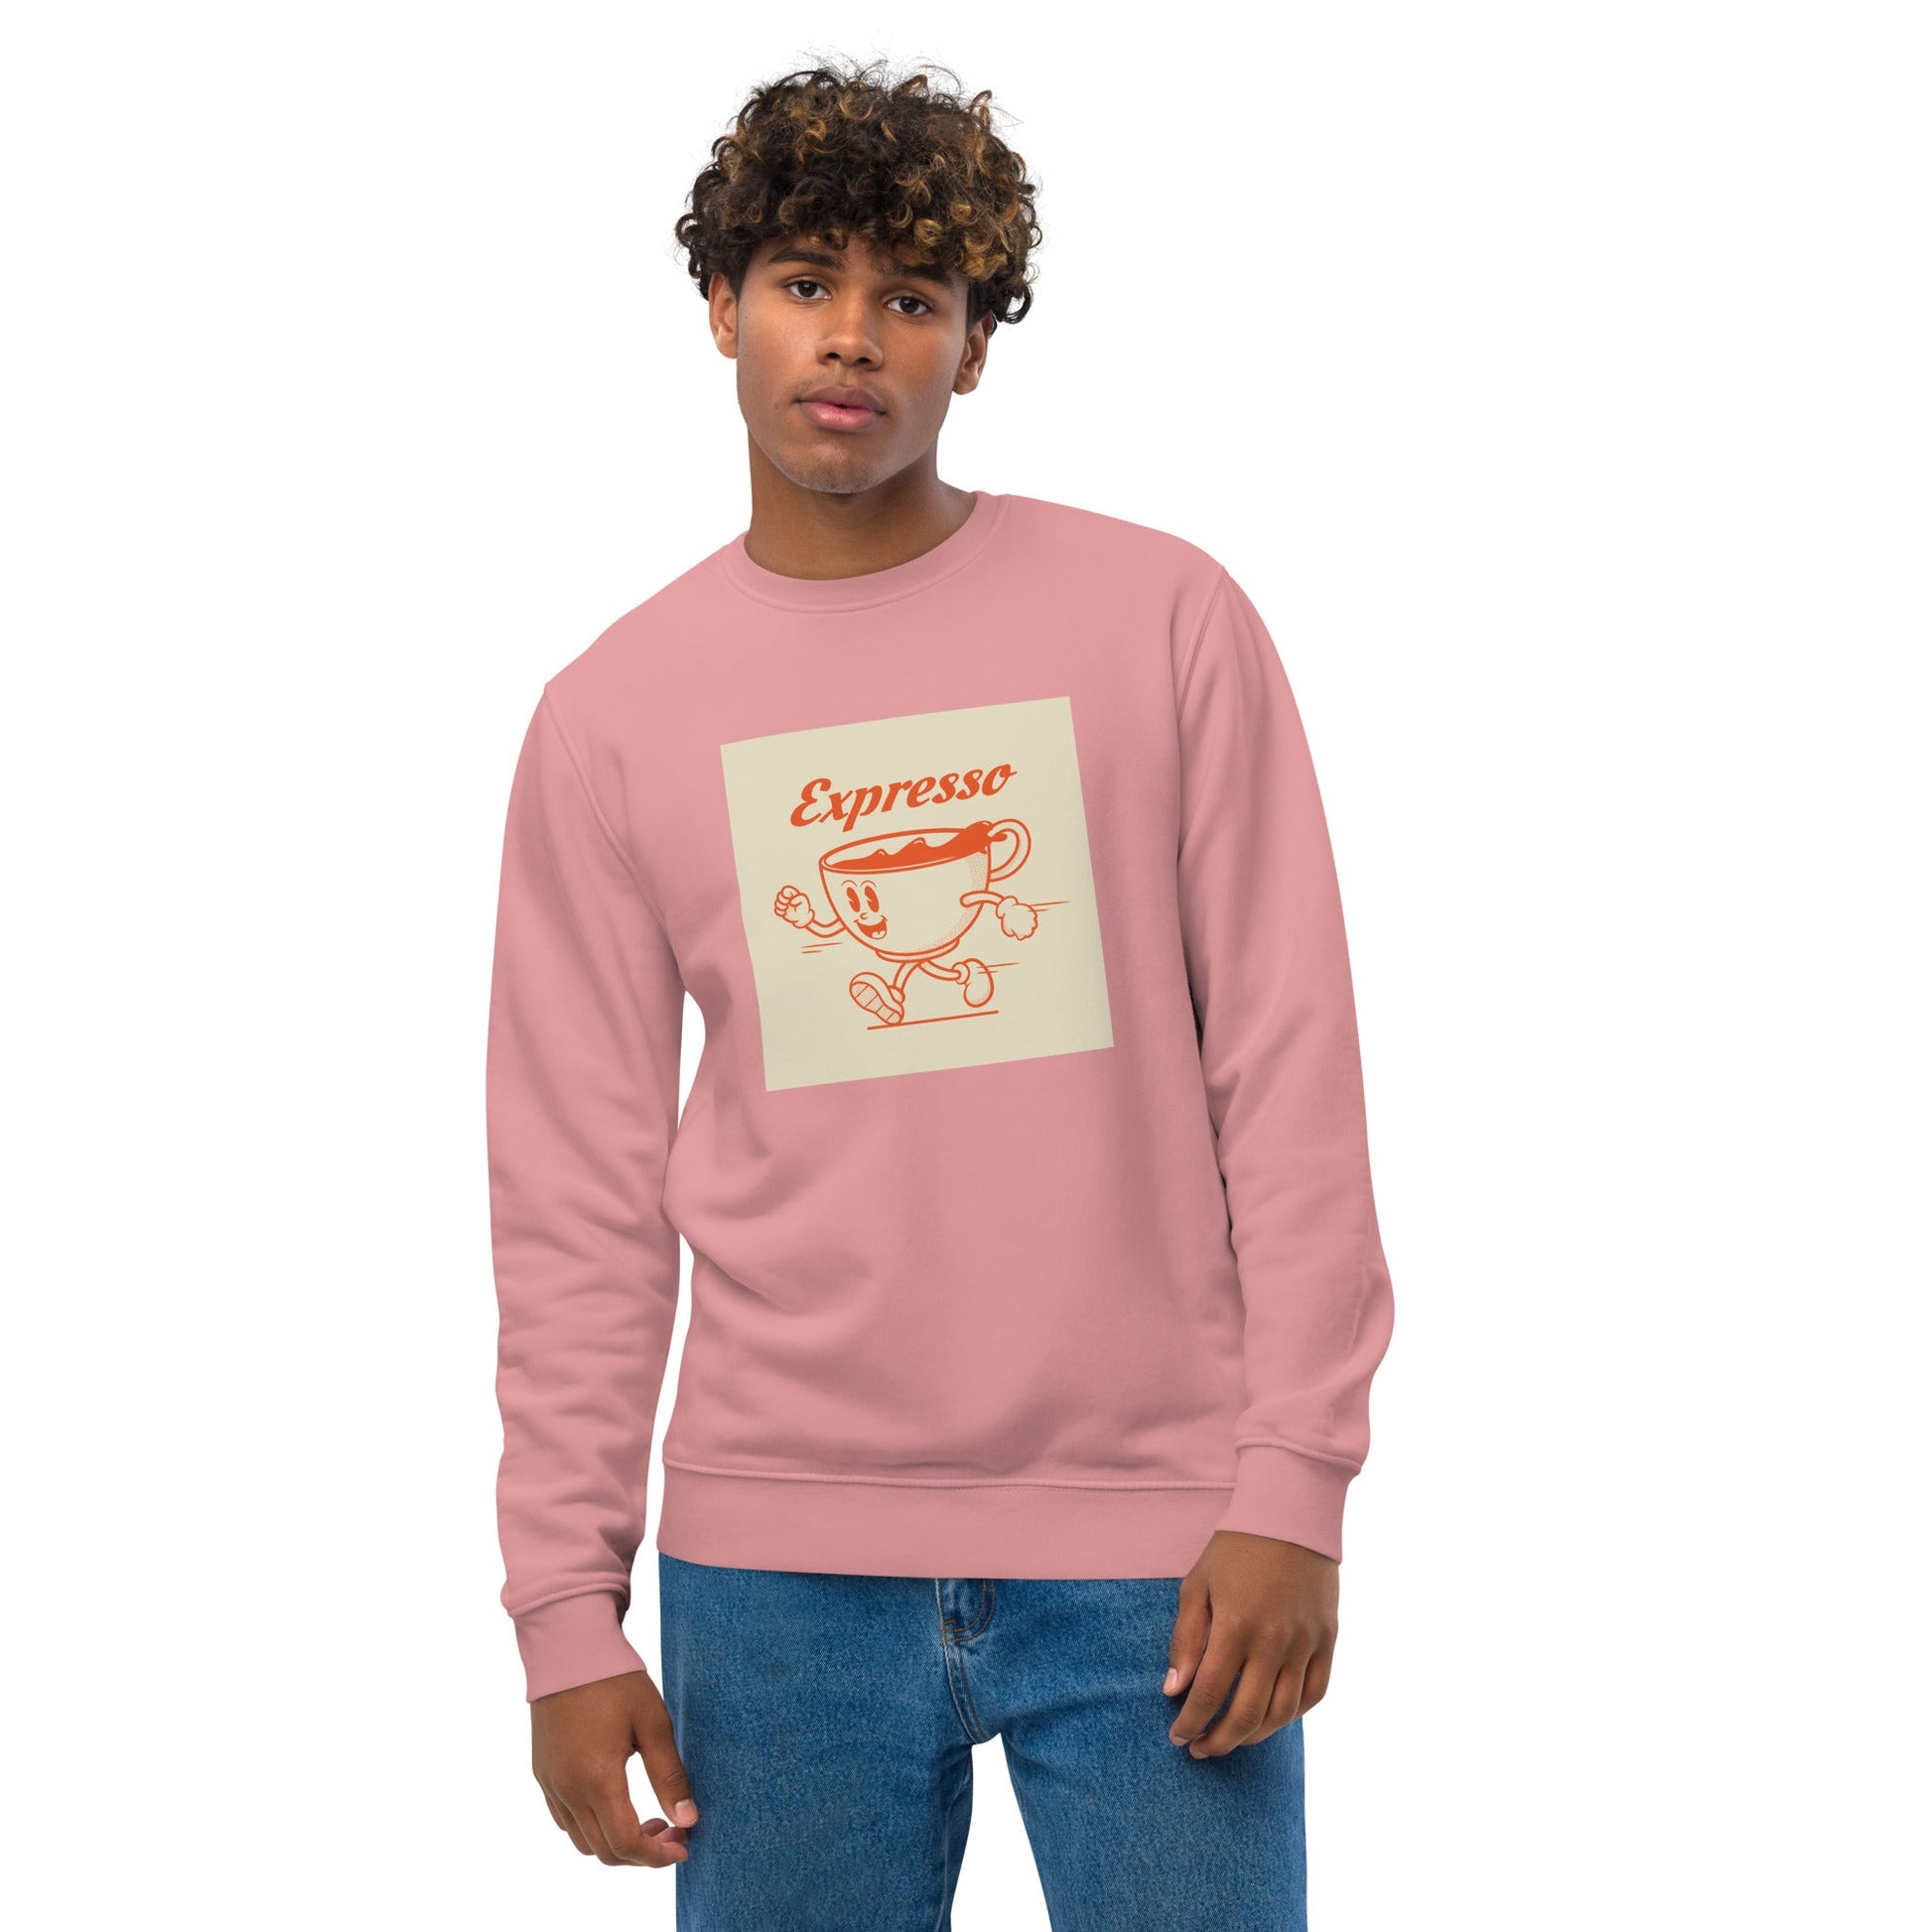 Positive 'Expresso' Retro Organic Cotton Sweatshirt - Expresso Sweatshirt